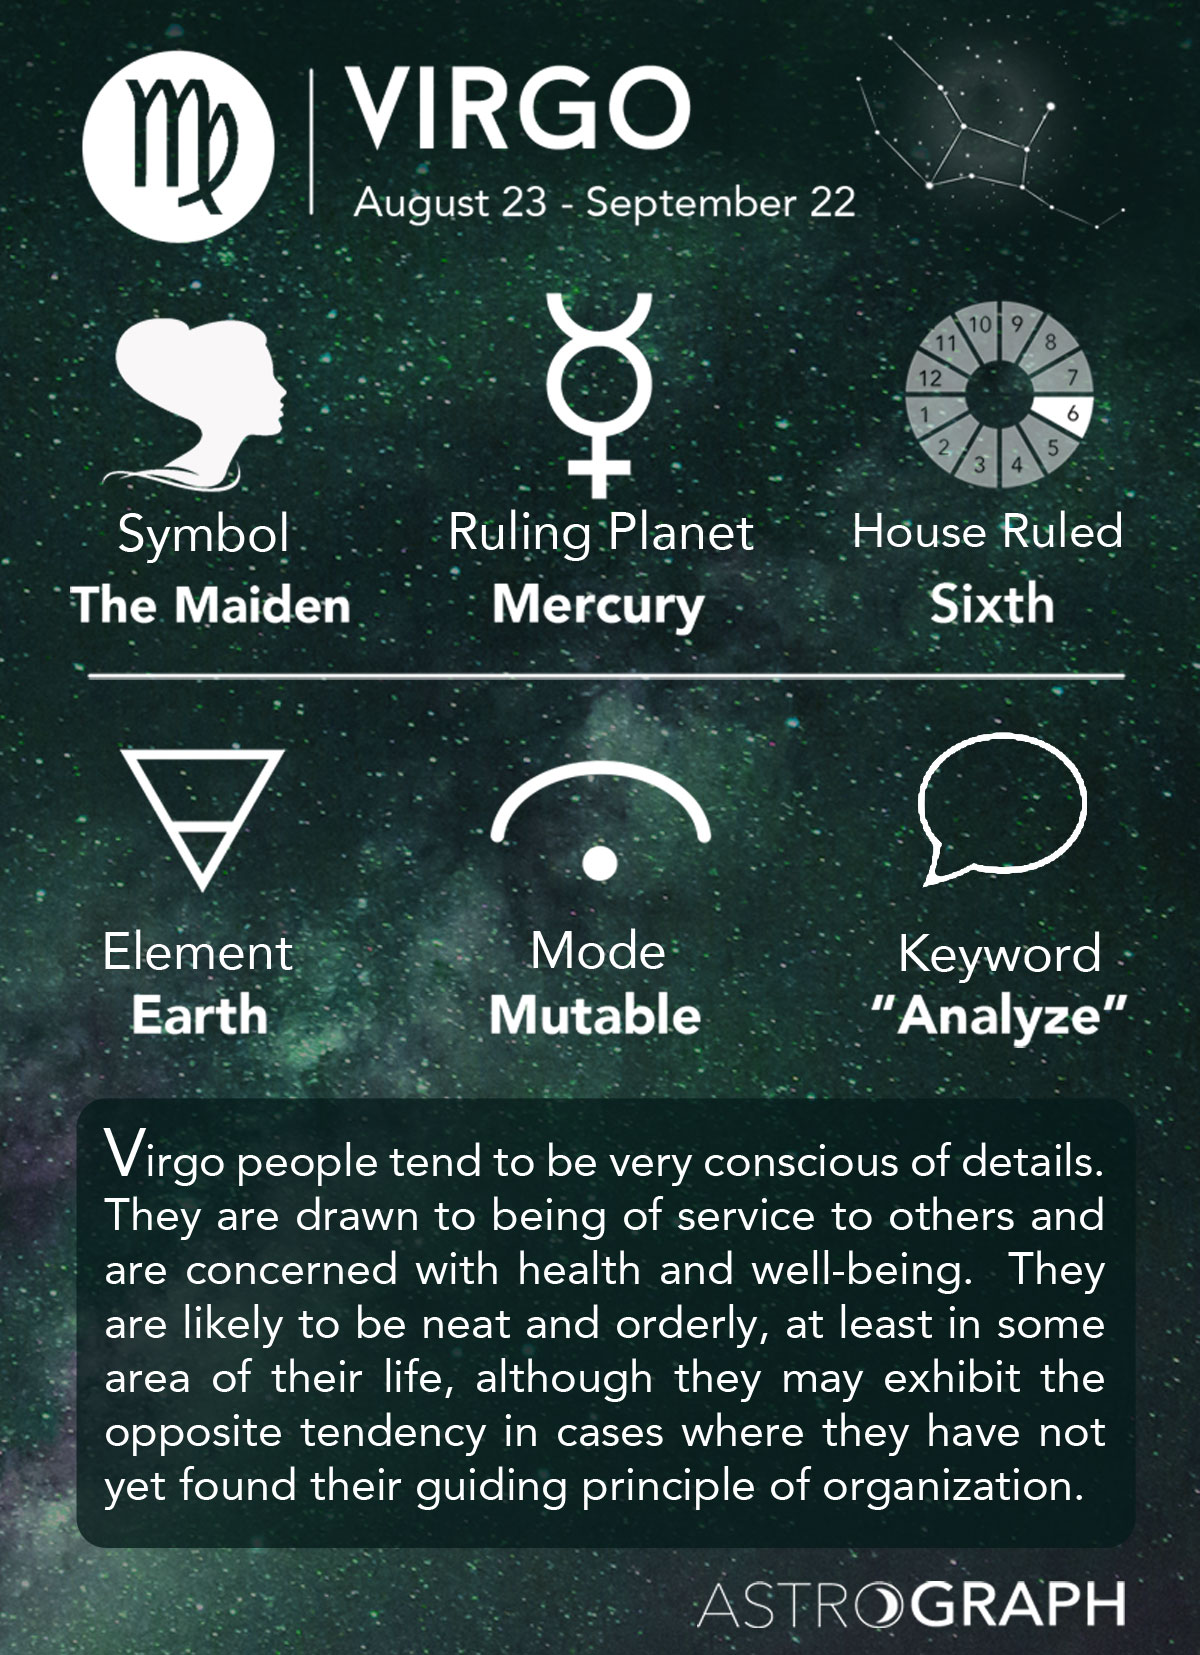 Virgo: The Zodiac Sign After Leo